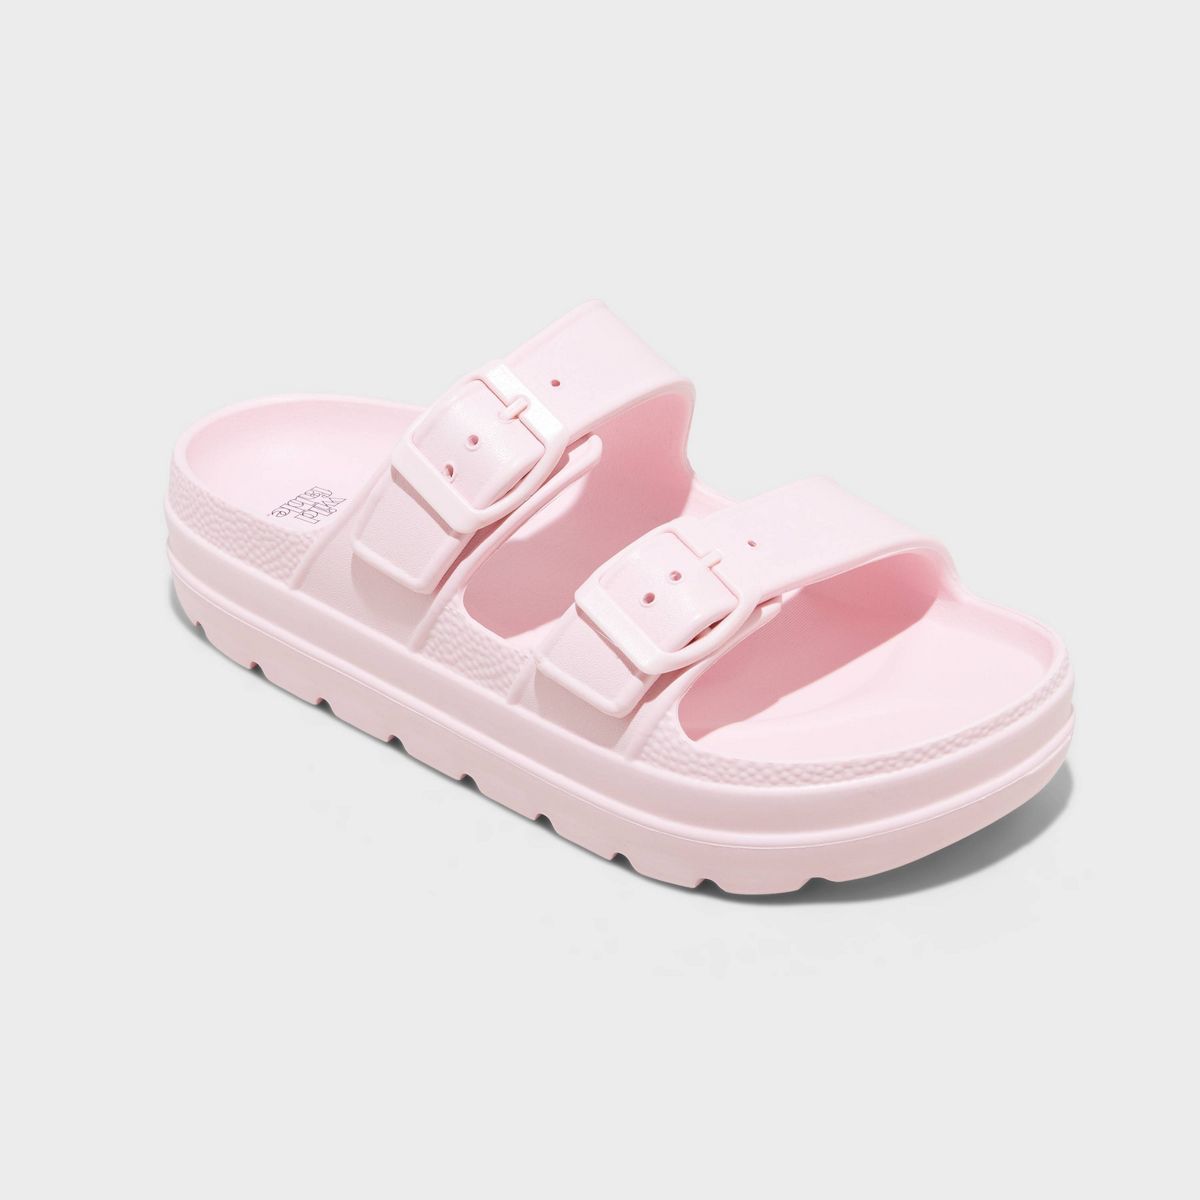 Women's Trixie Platform Sandals - Wild Fable™ Light Pink 8 | Target